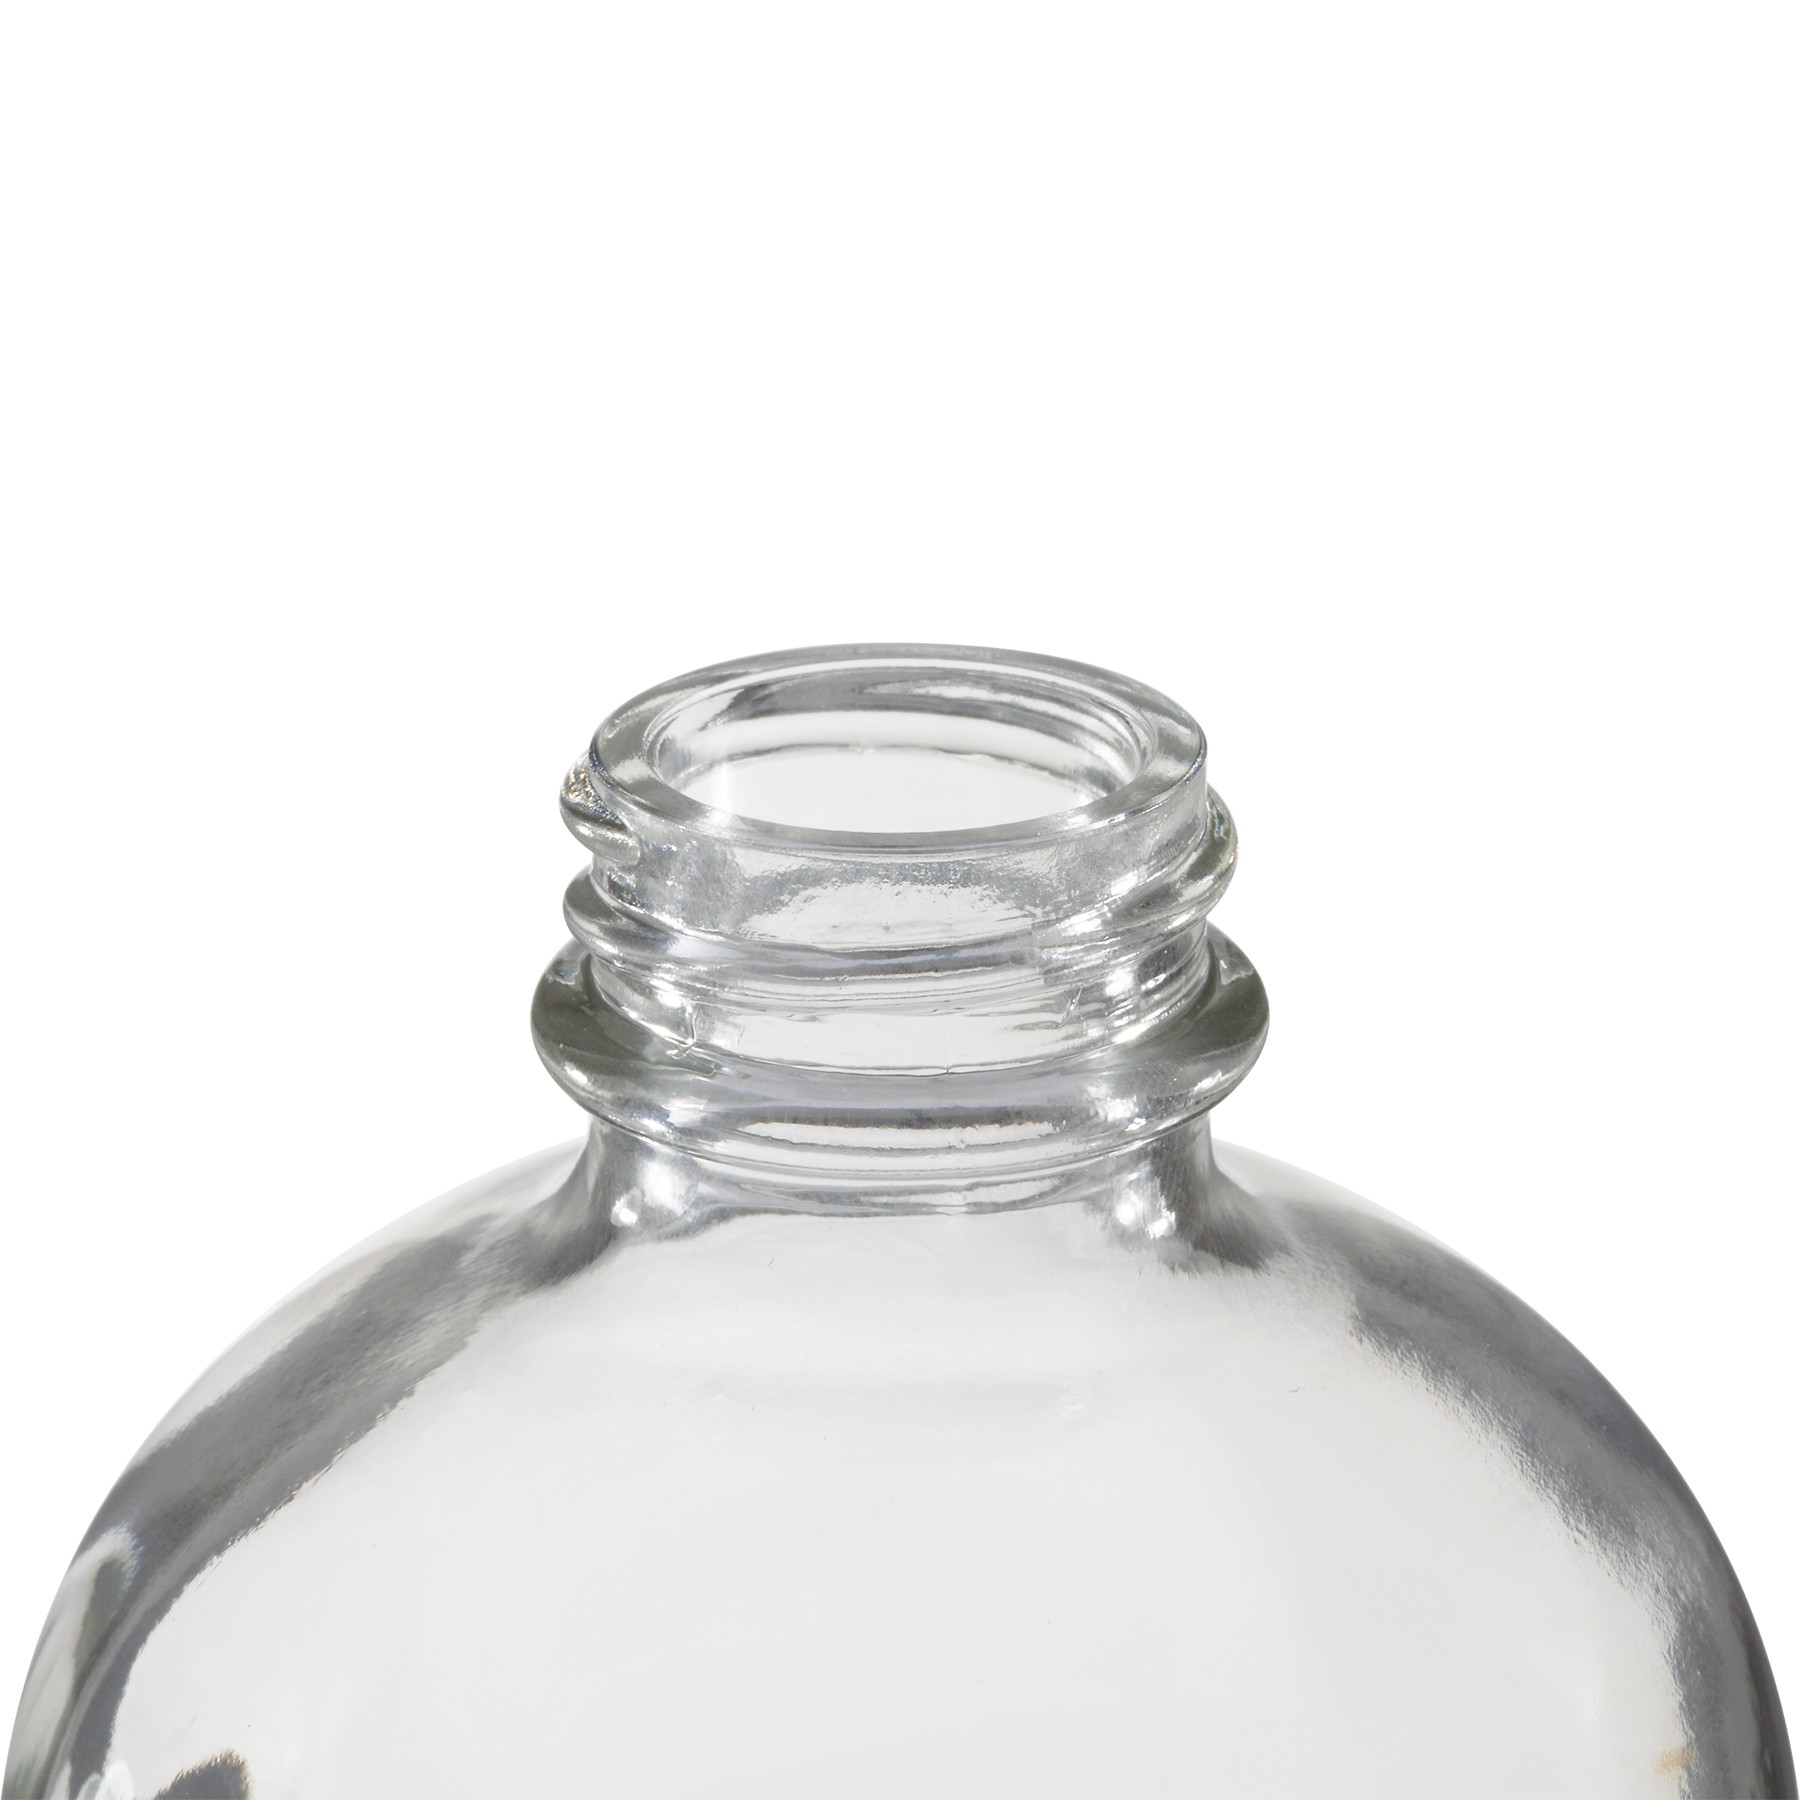 16oz (480ml) Flint (Clear) Boston Round Glass Bottle - 28-400 Neck